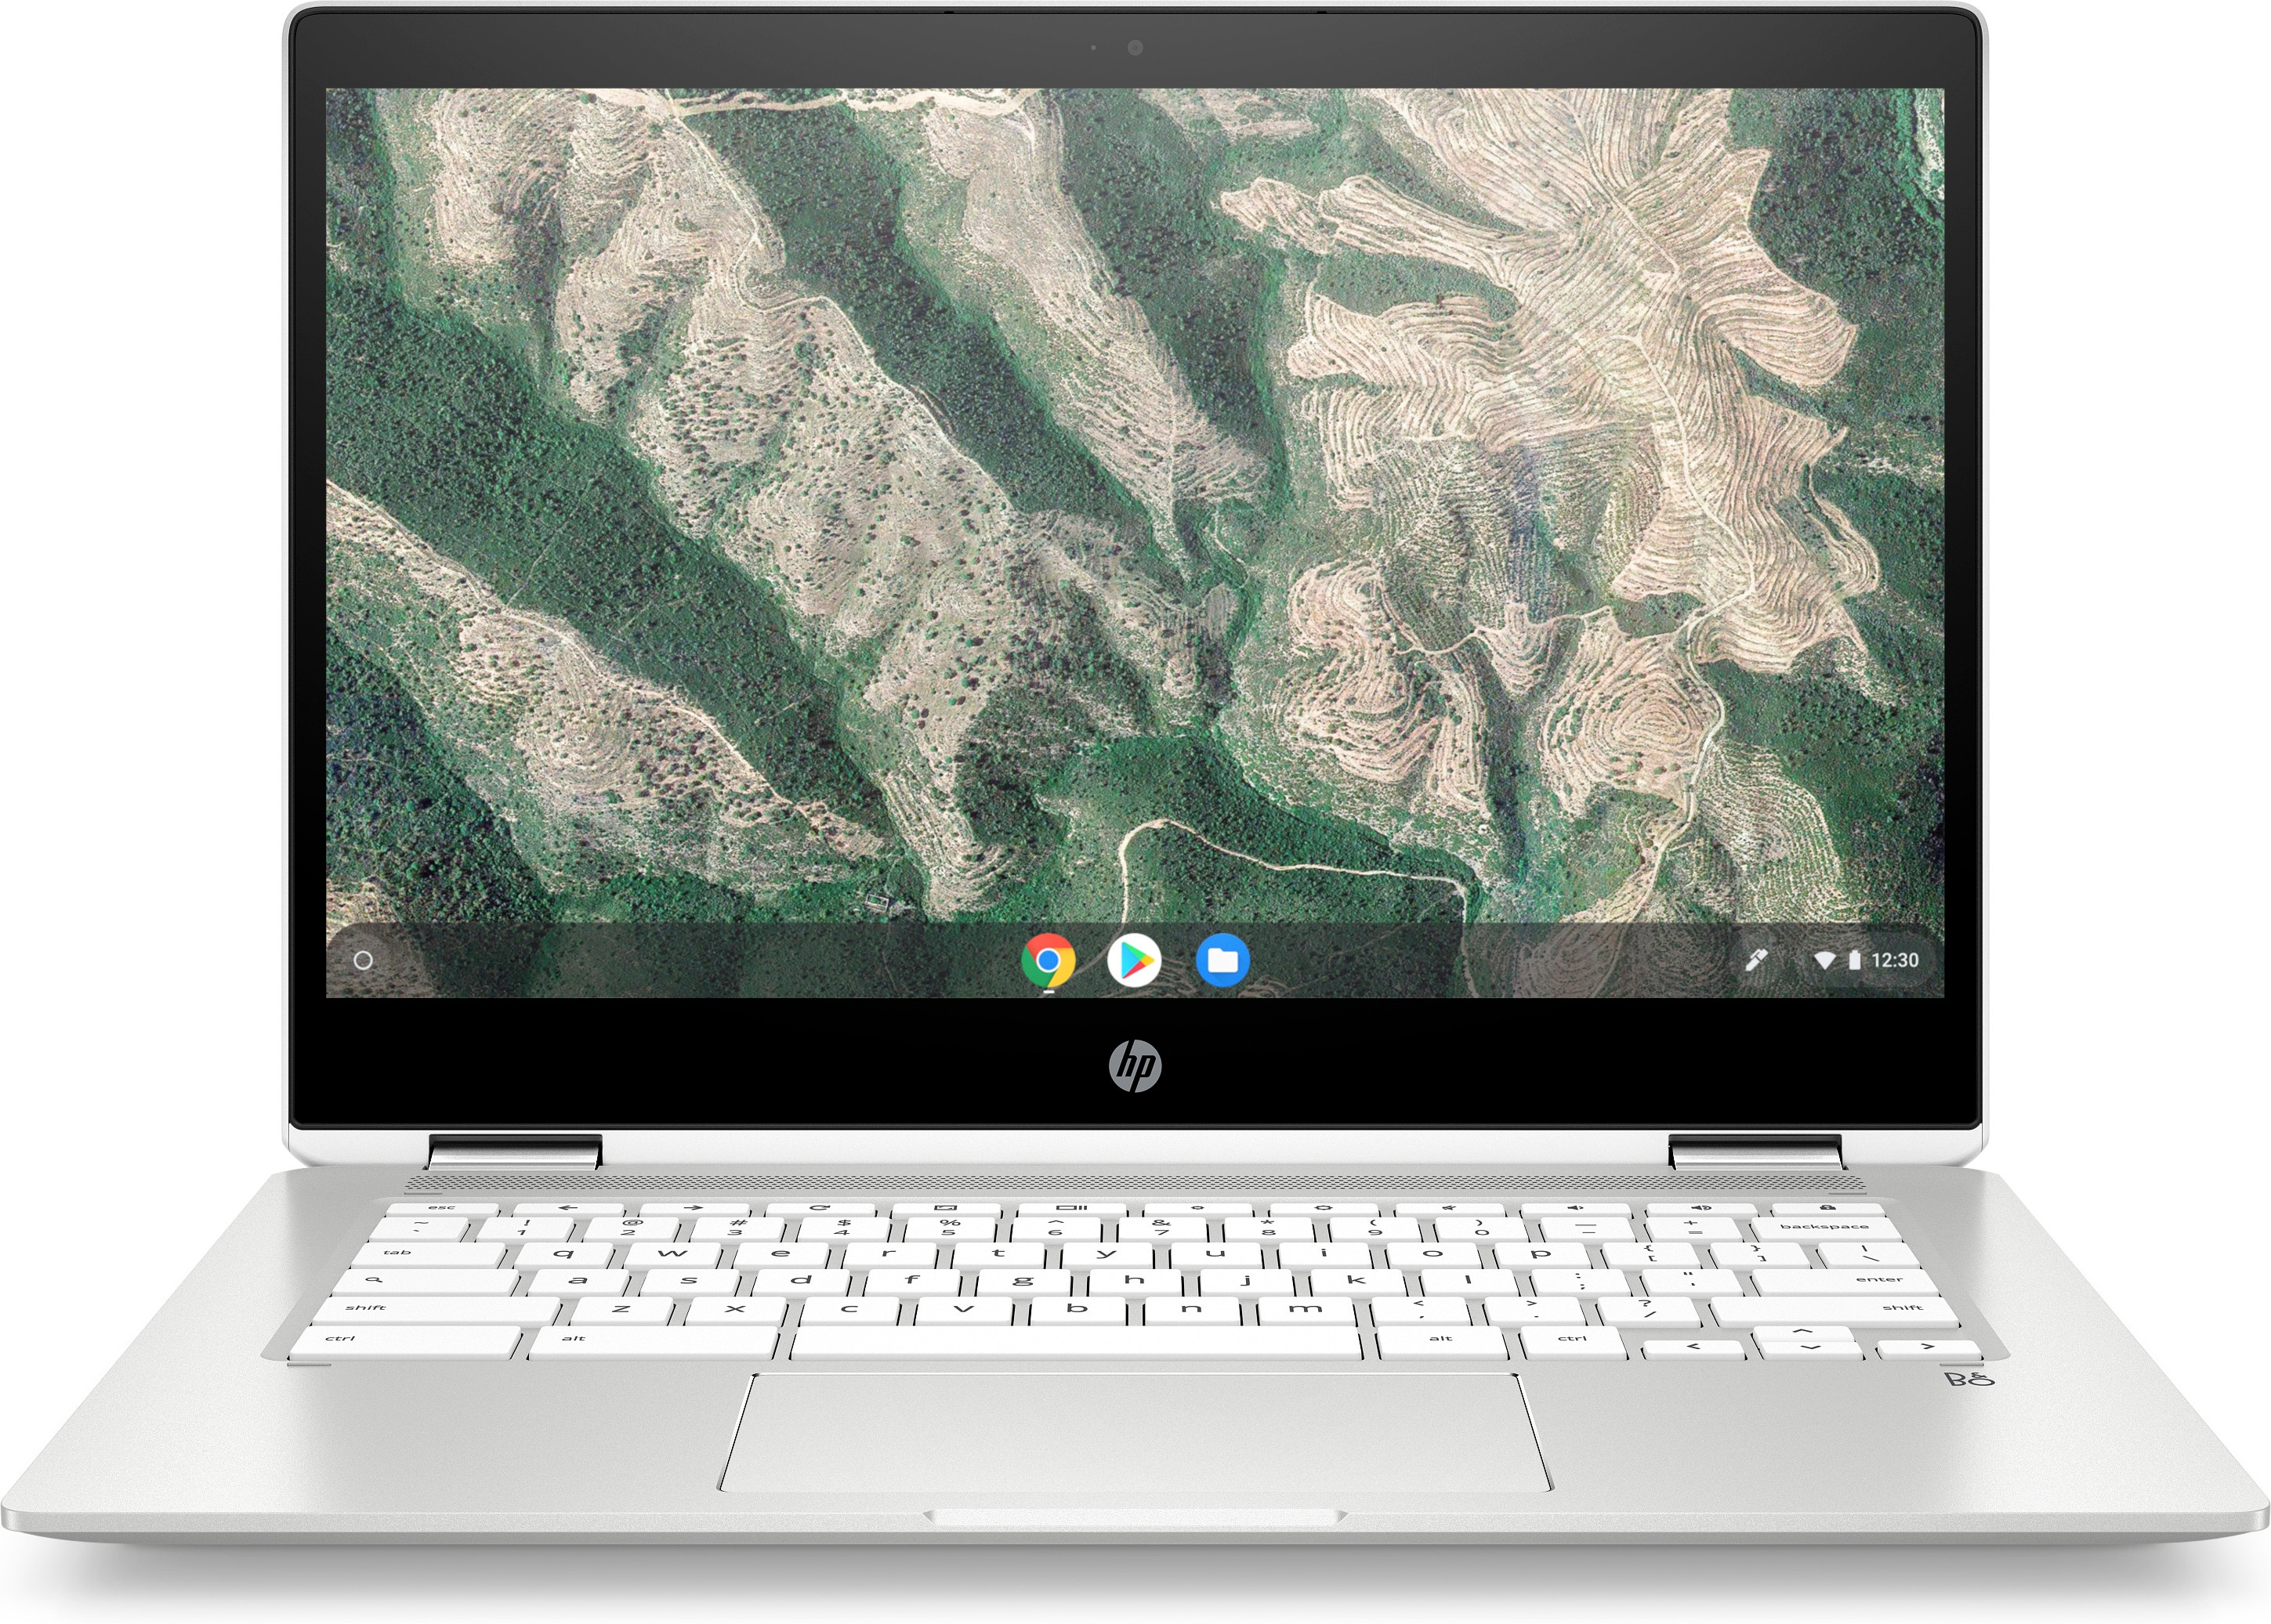 HP Chromebook x360 14b-ca0001ns Celeron N4020 4GB 64GB EMMC 14 Táctil Chrome OS Reacondicionado